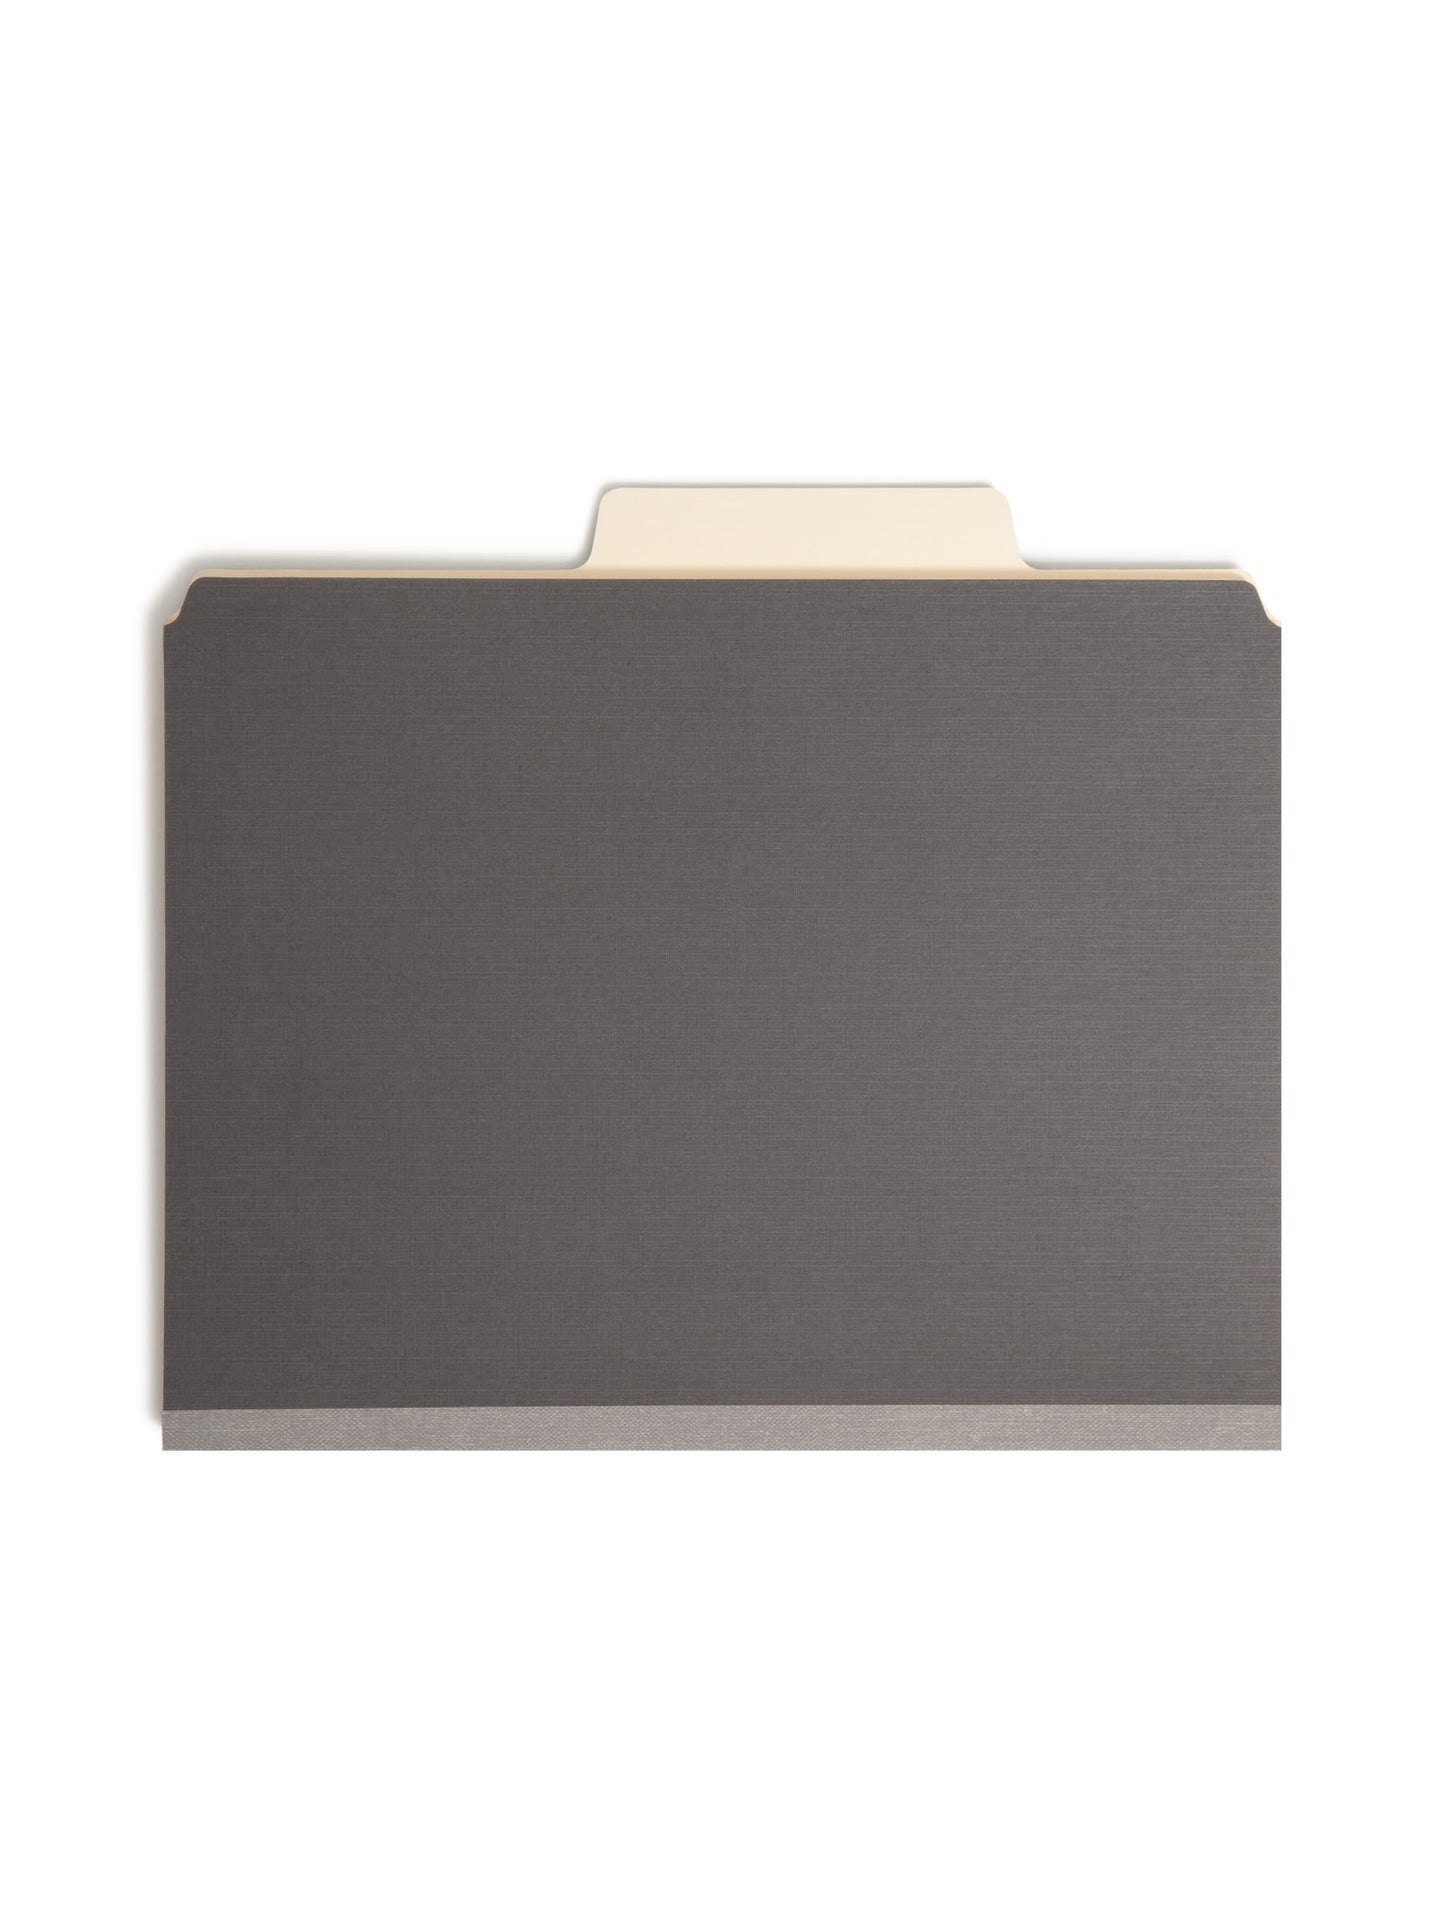 SuperTab® Classification File Folders, Dark Gray Color, Letter Size, 